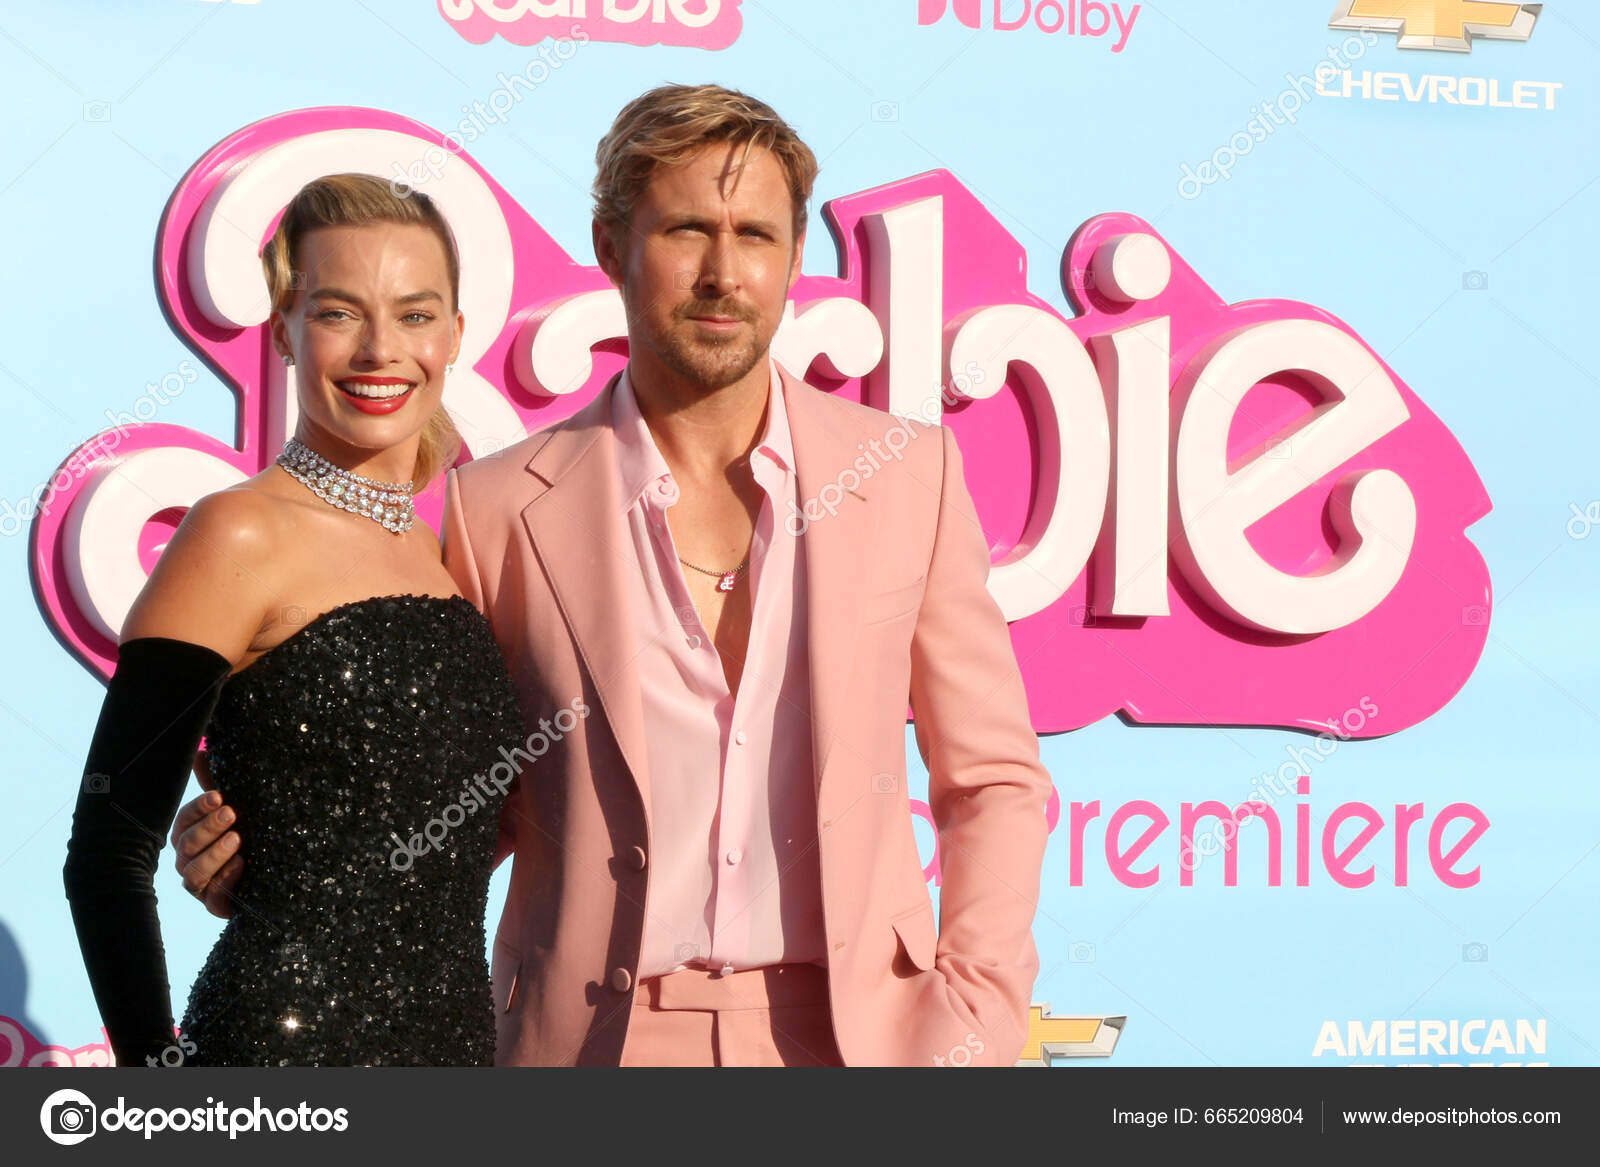 Los Angeles Jul Gosling Barbie World Premiere – Redaktionelle stock-fotos © #665209804